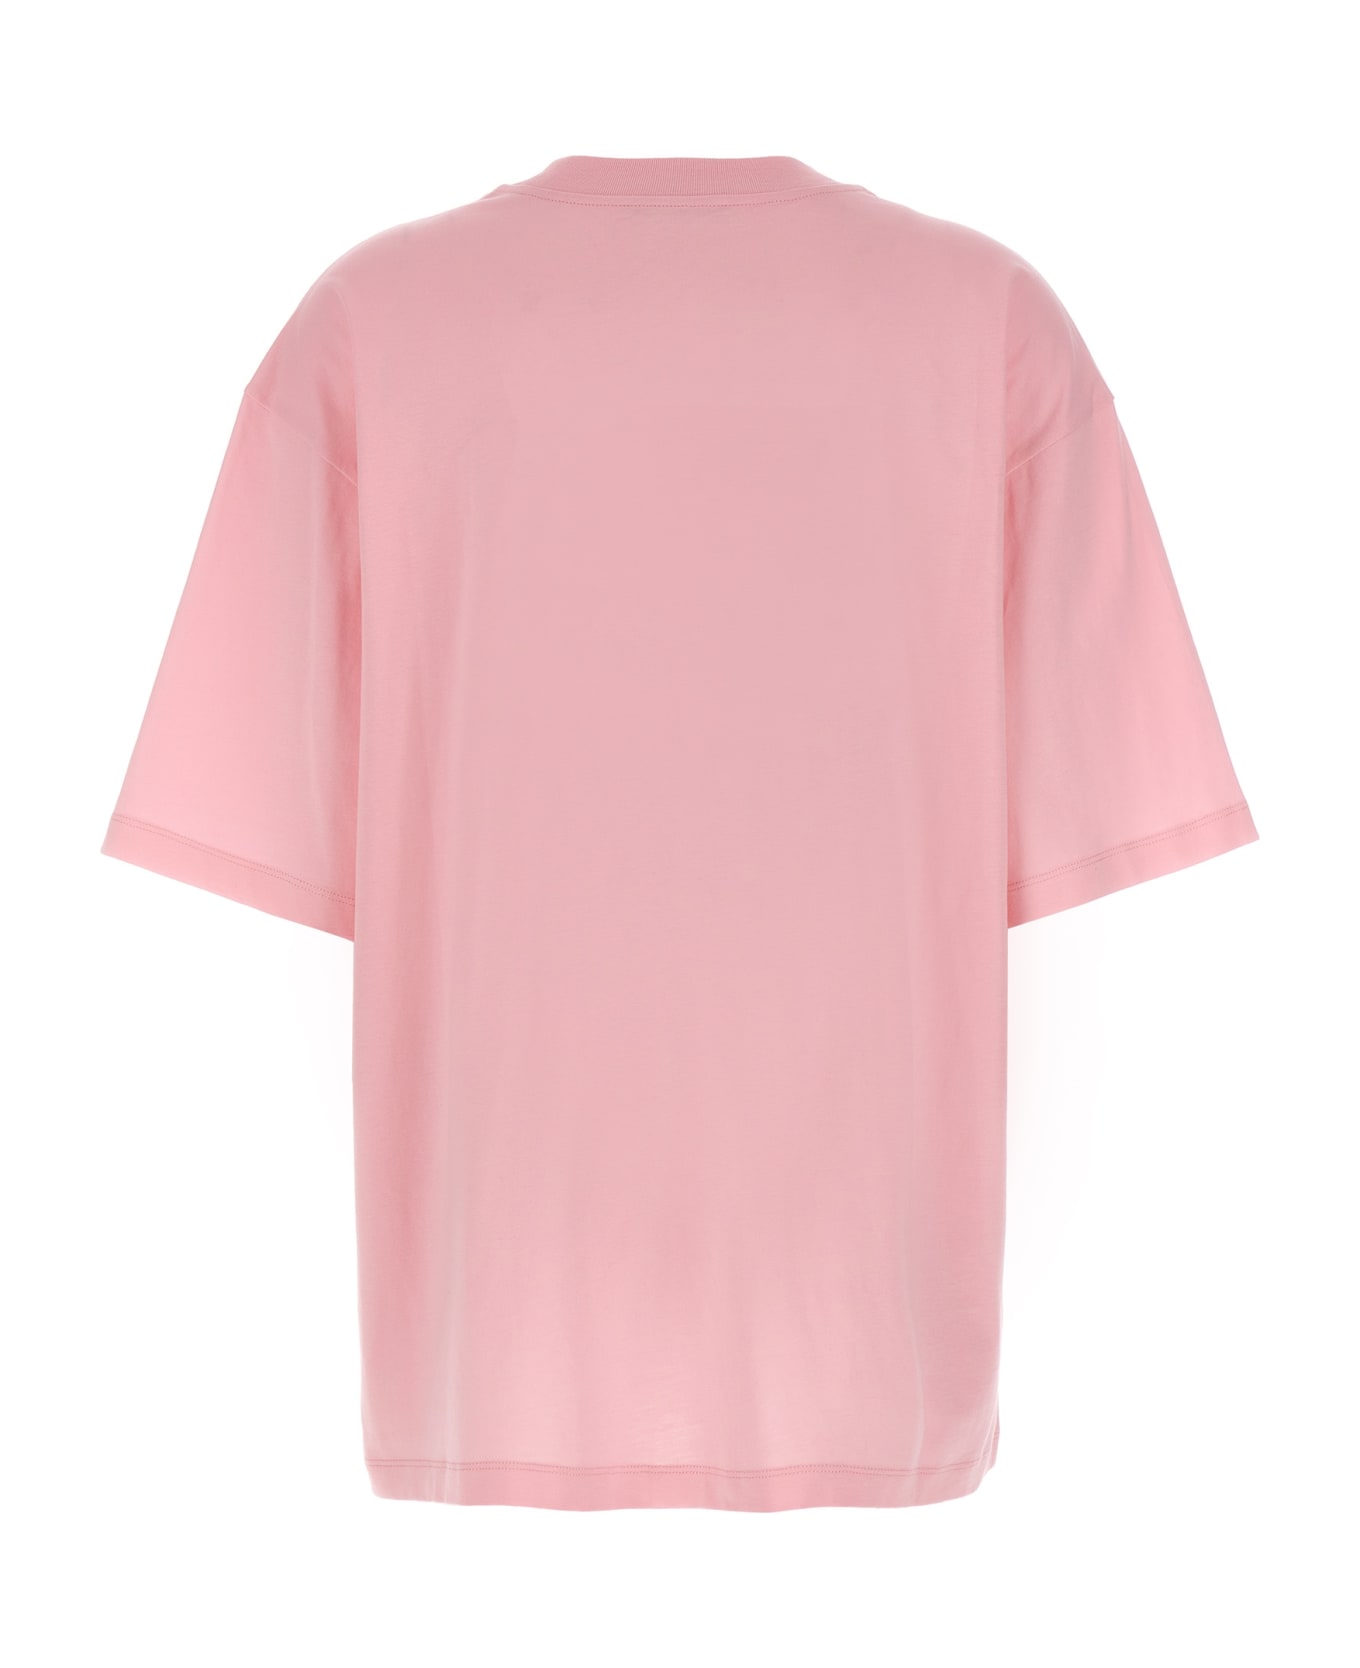 Marni Logo Print T-shirt - Pink